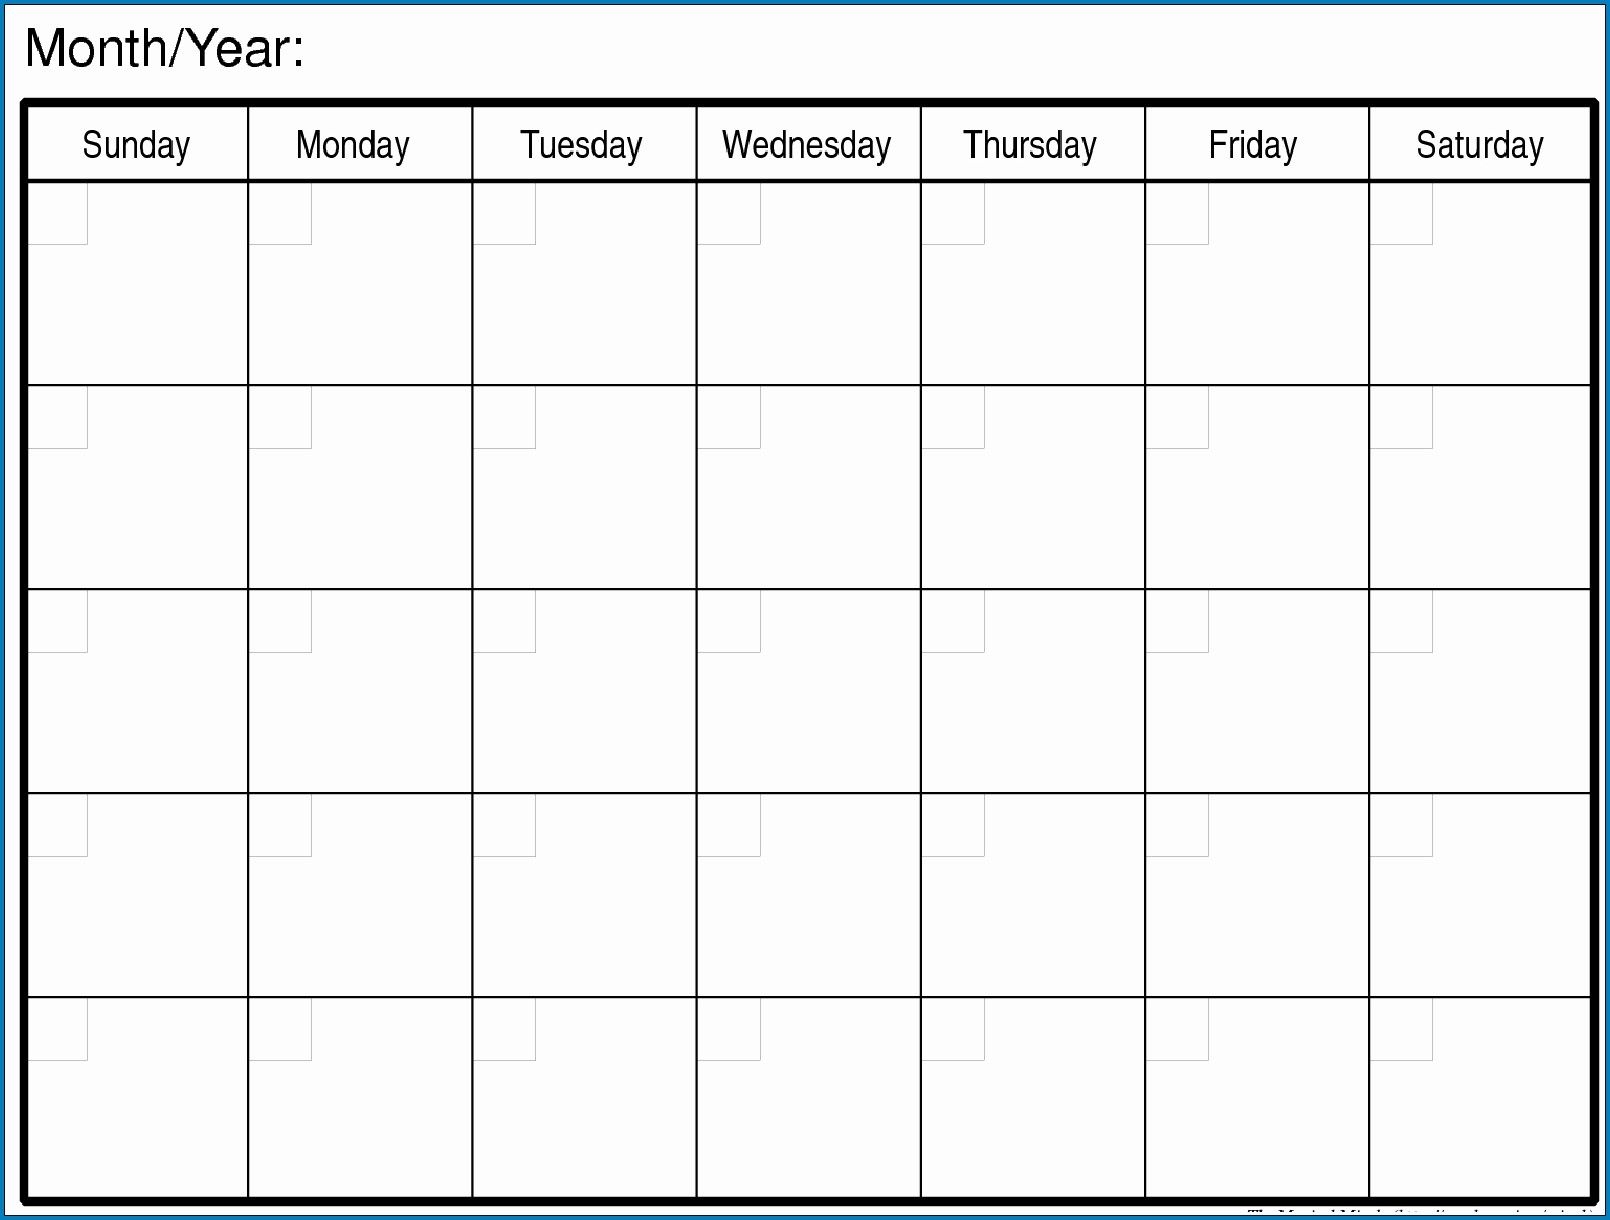 Free Blank Printable Monthly Calendar Monday – Friday